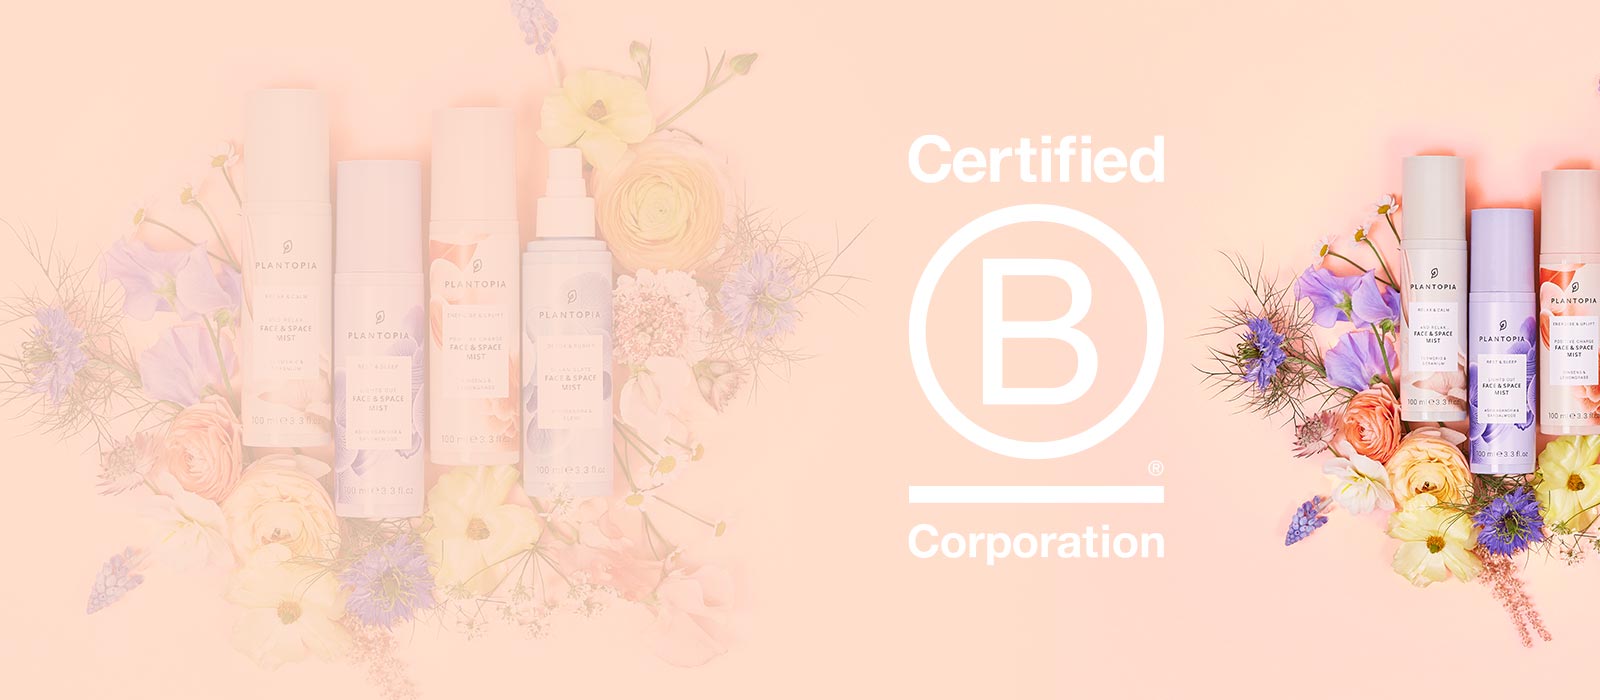 KMI is now a certified B Corp!